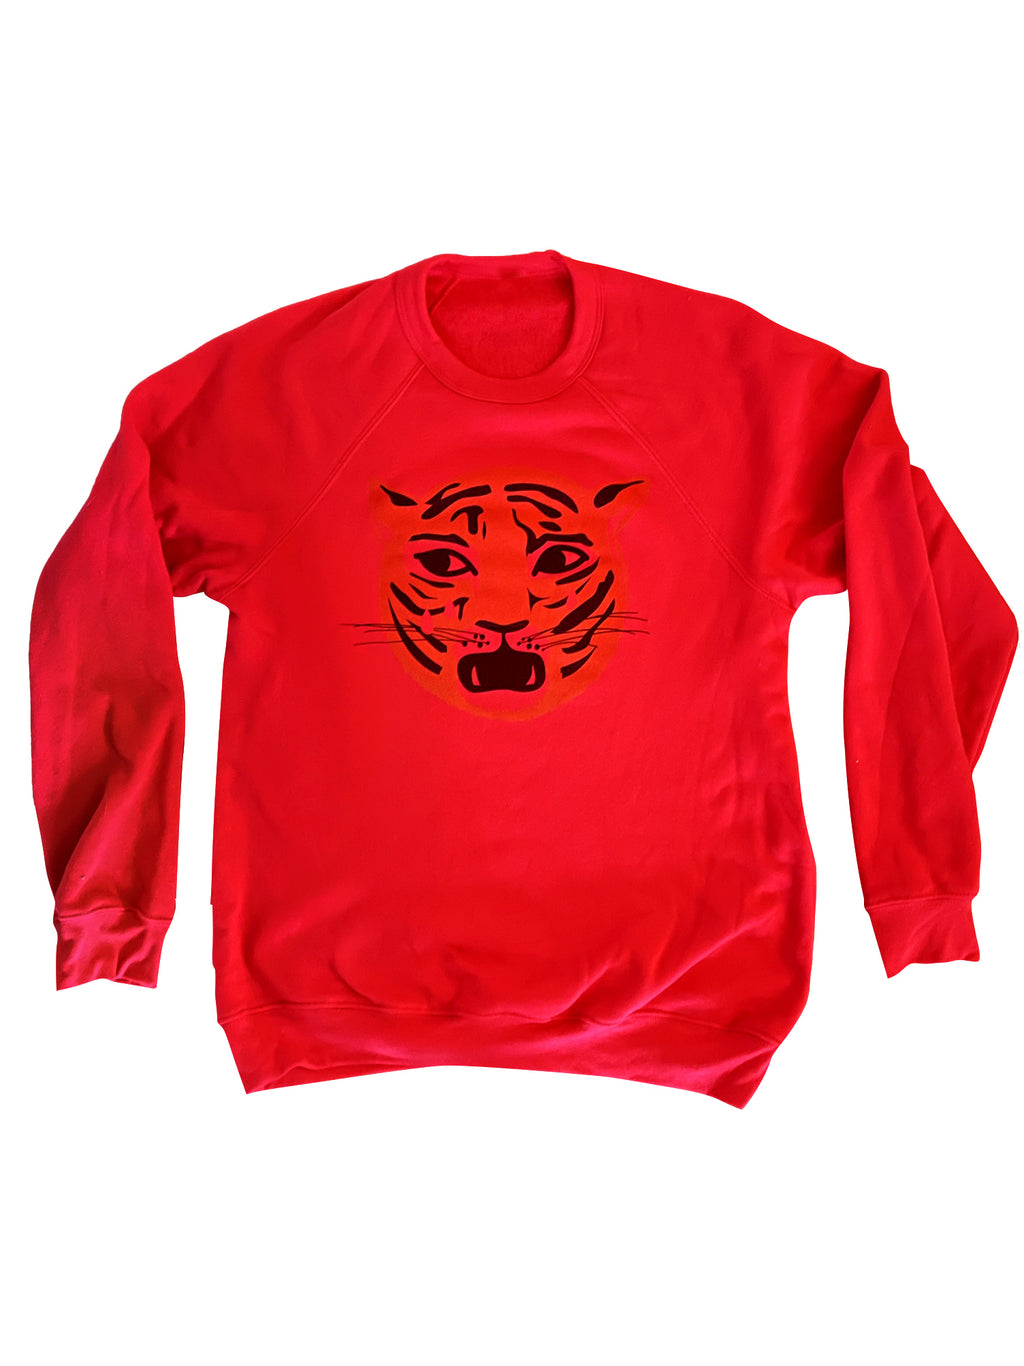 Unisex Crying Tiger Sweatshirt